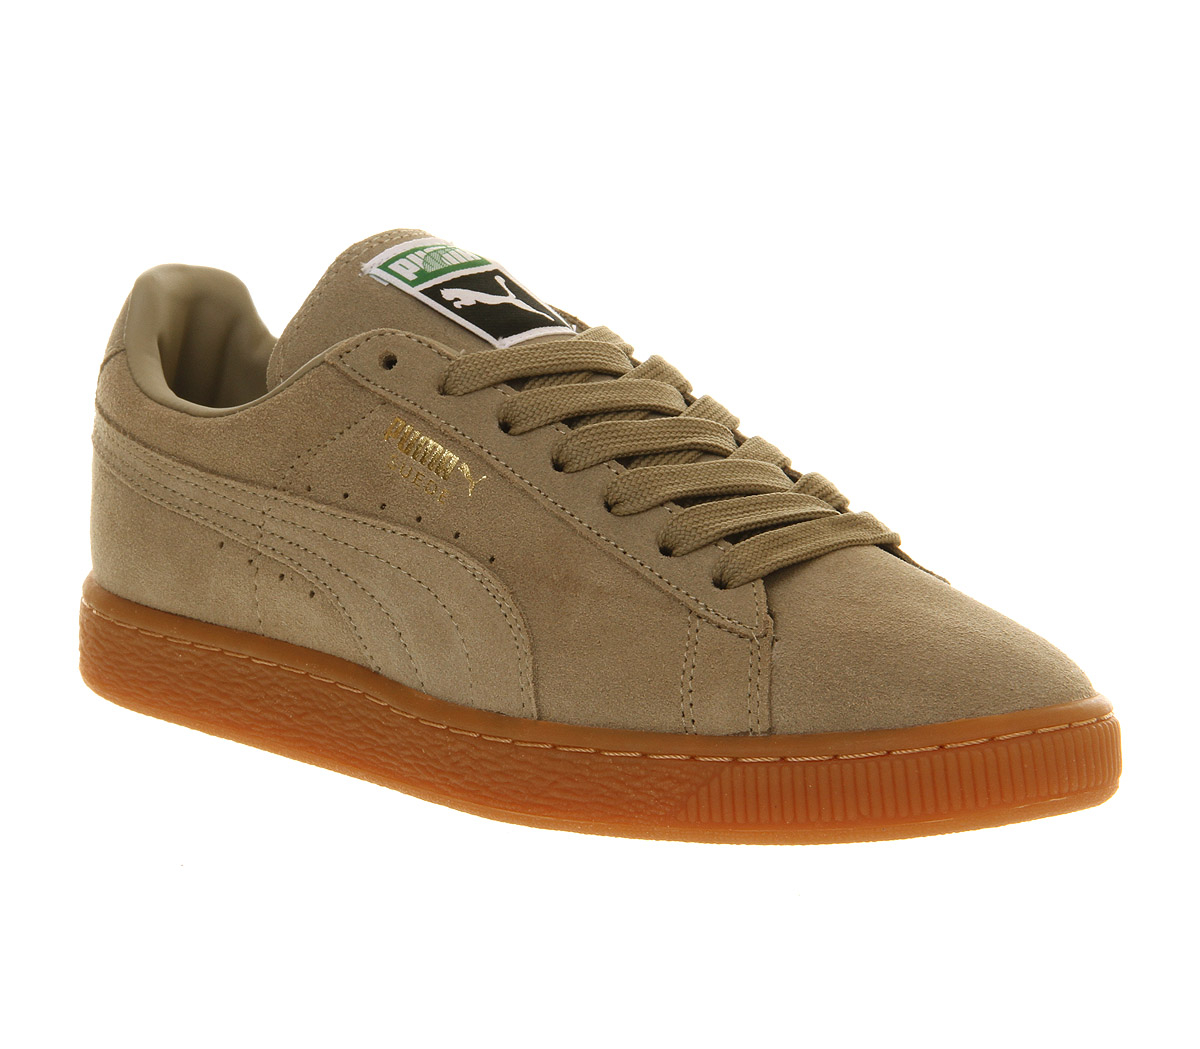 puma suede classic khaki gum gold trainers shoes